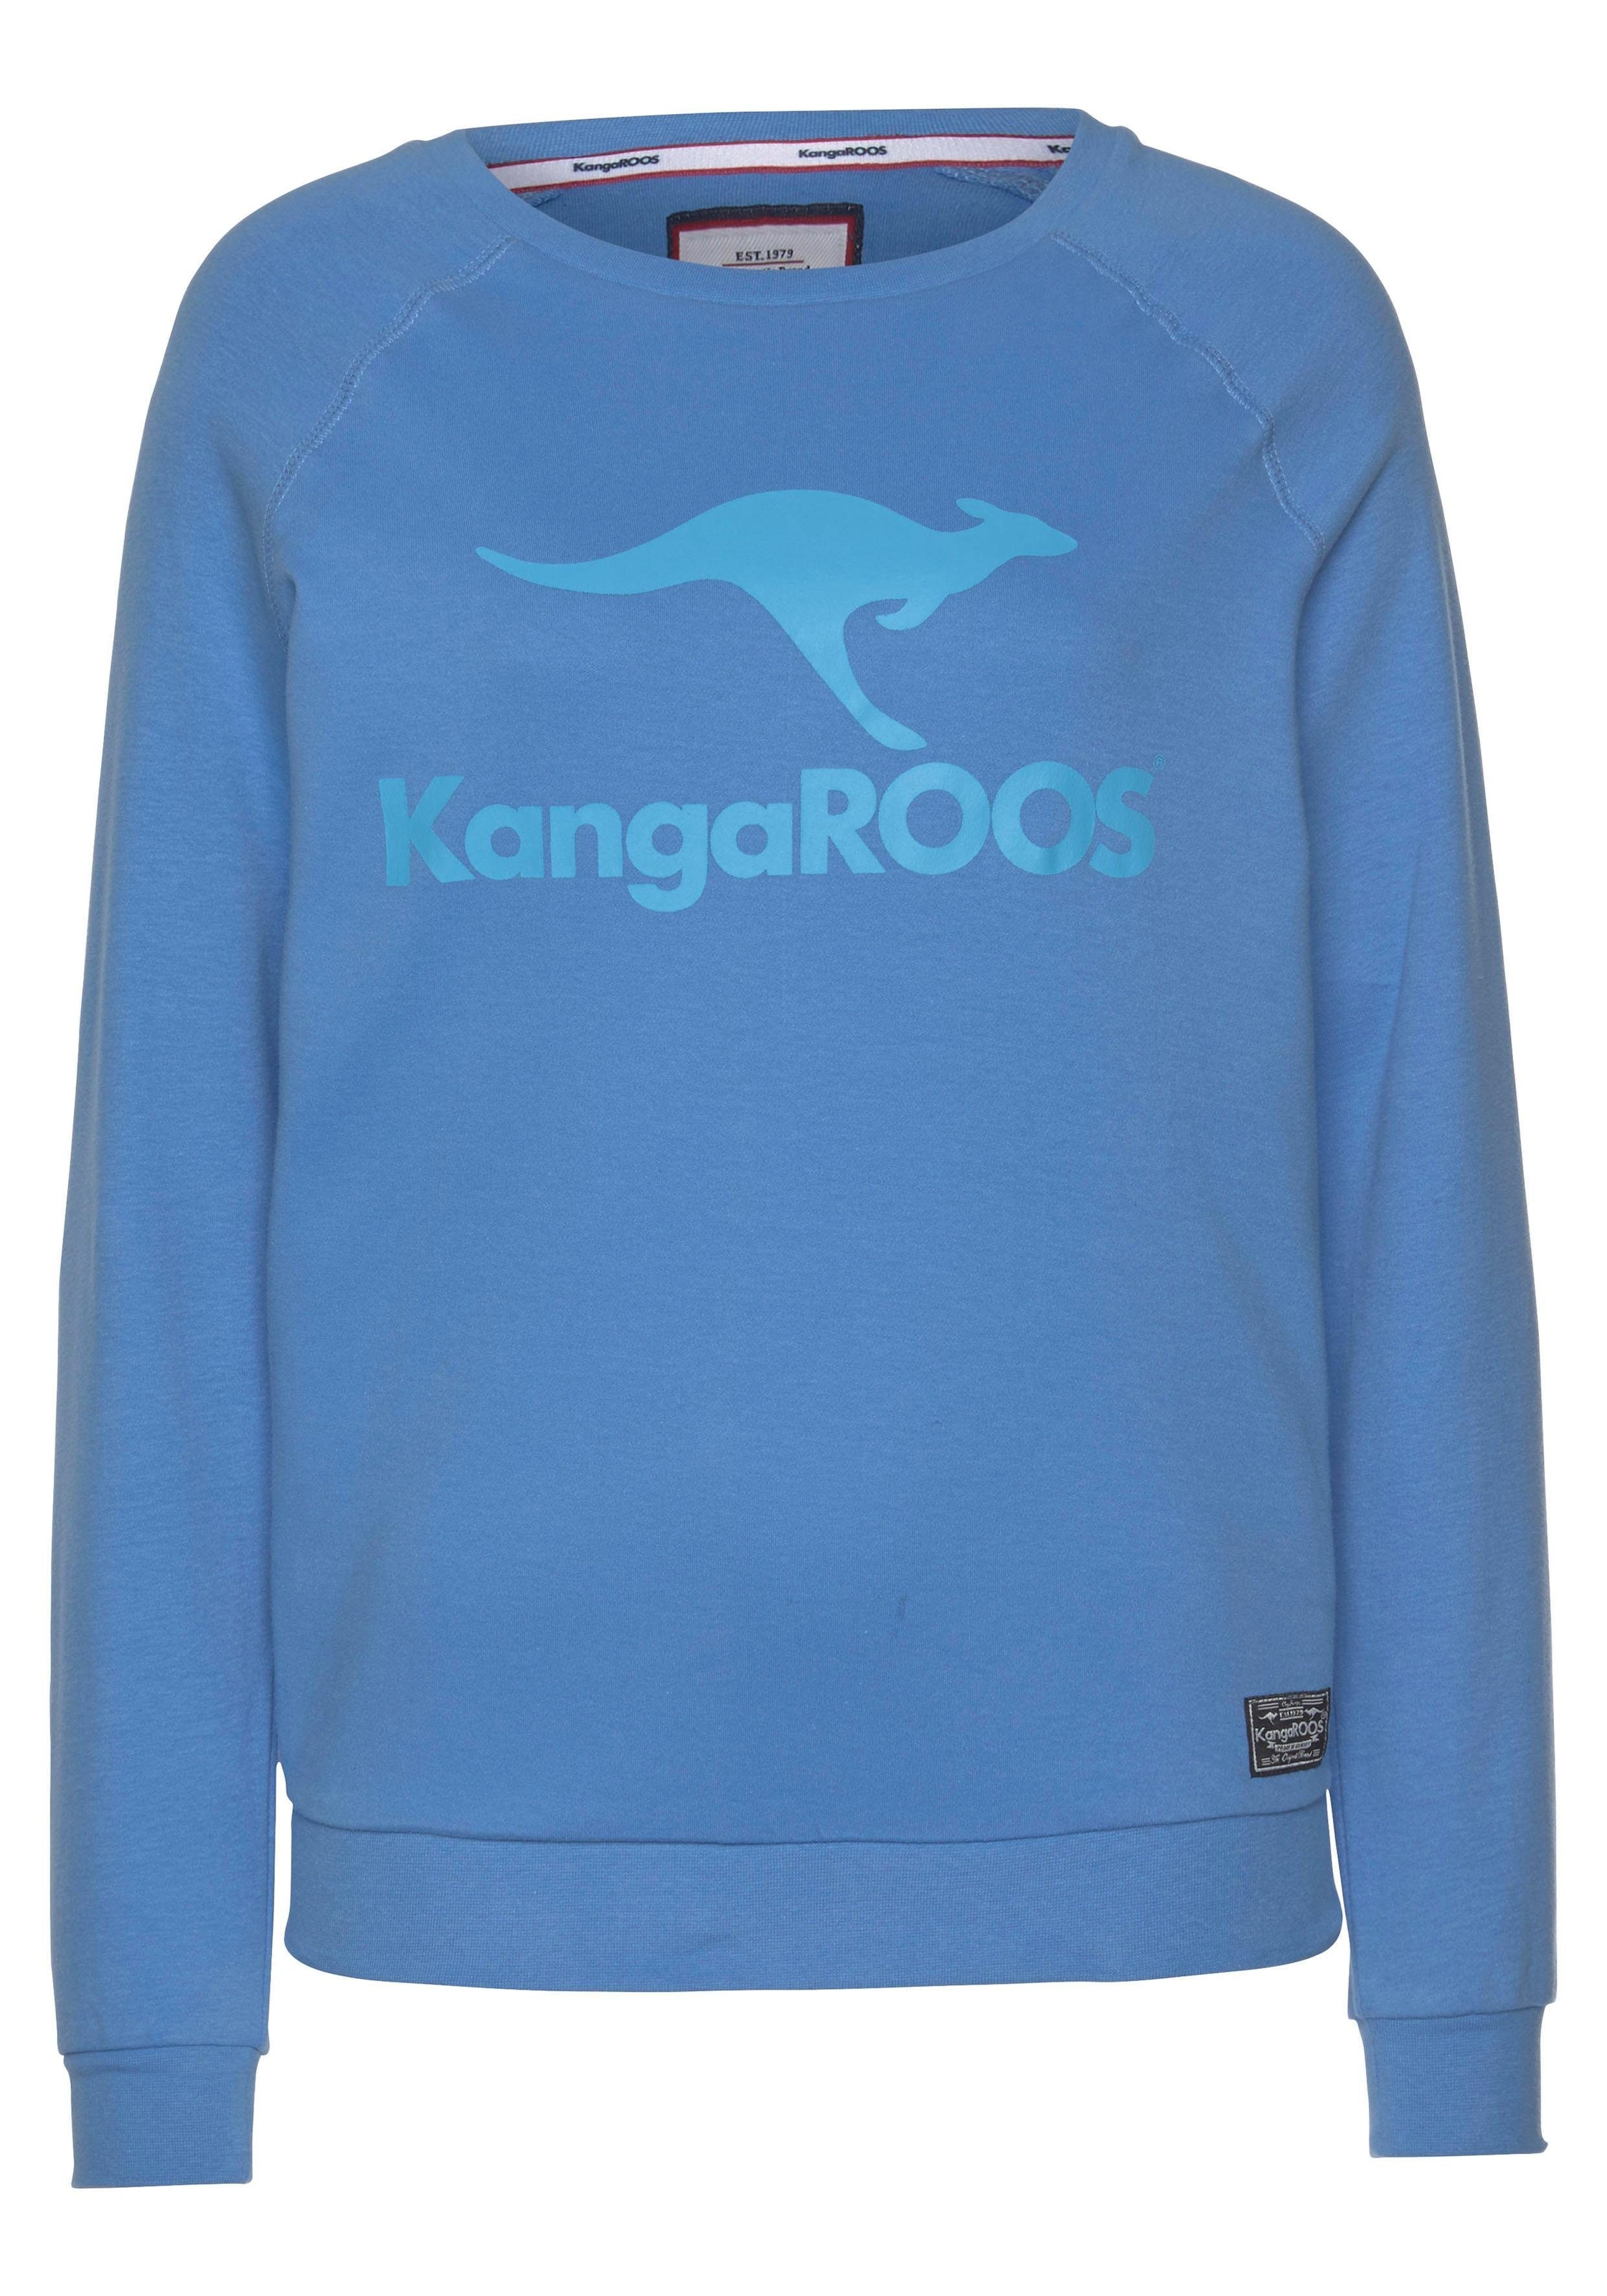 KangaROOS Sweater, mit großem ♕ vorne bei Label-Print